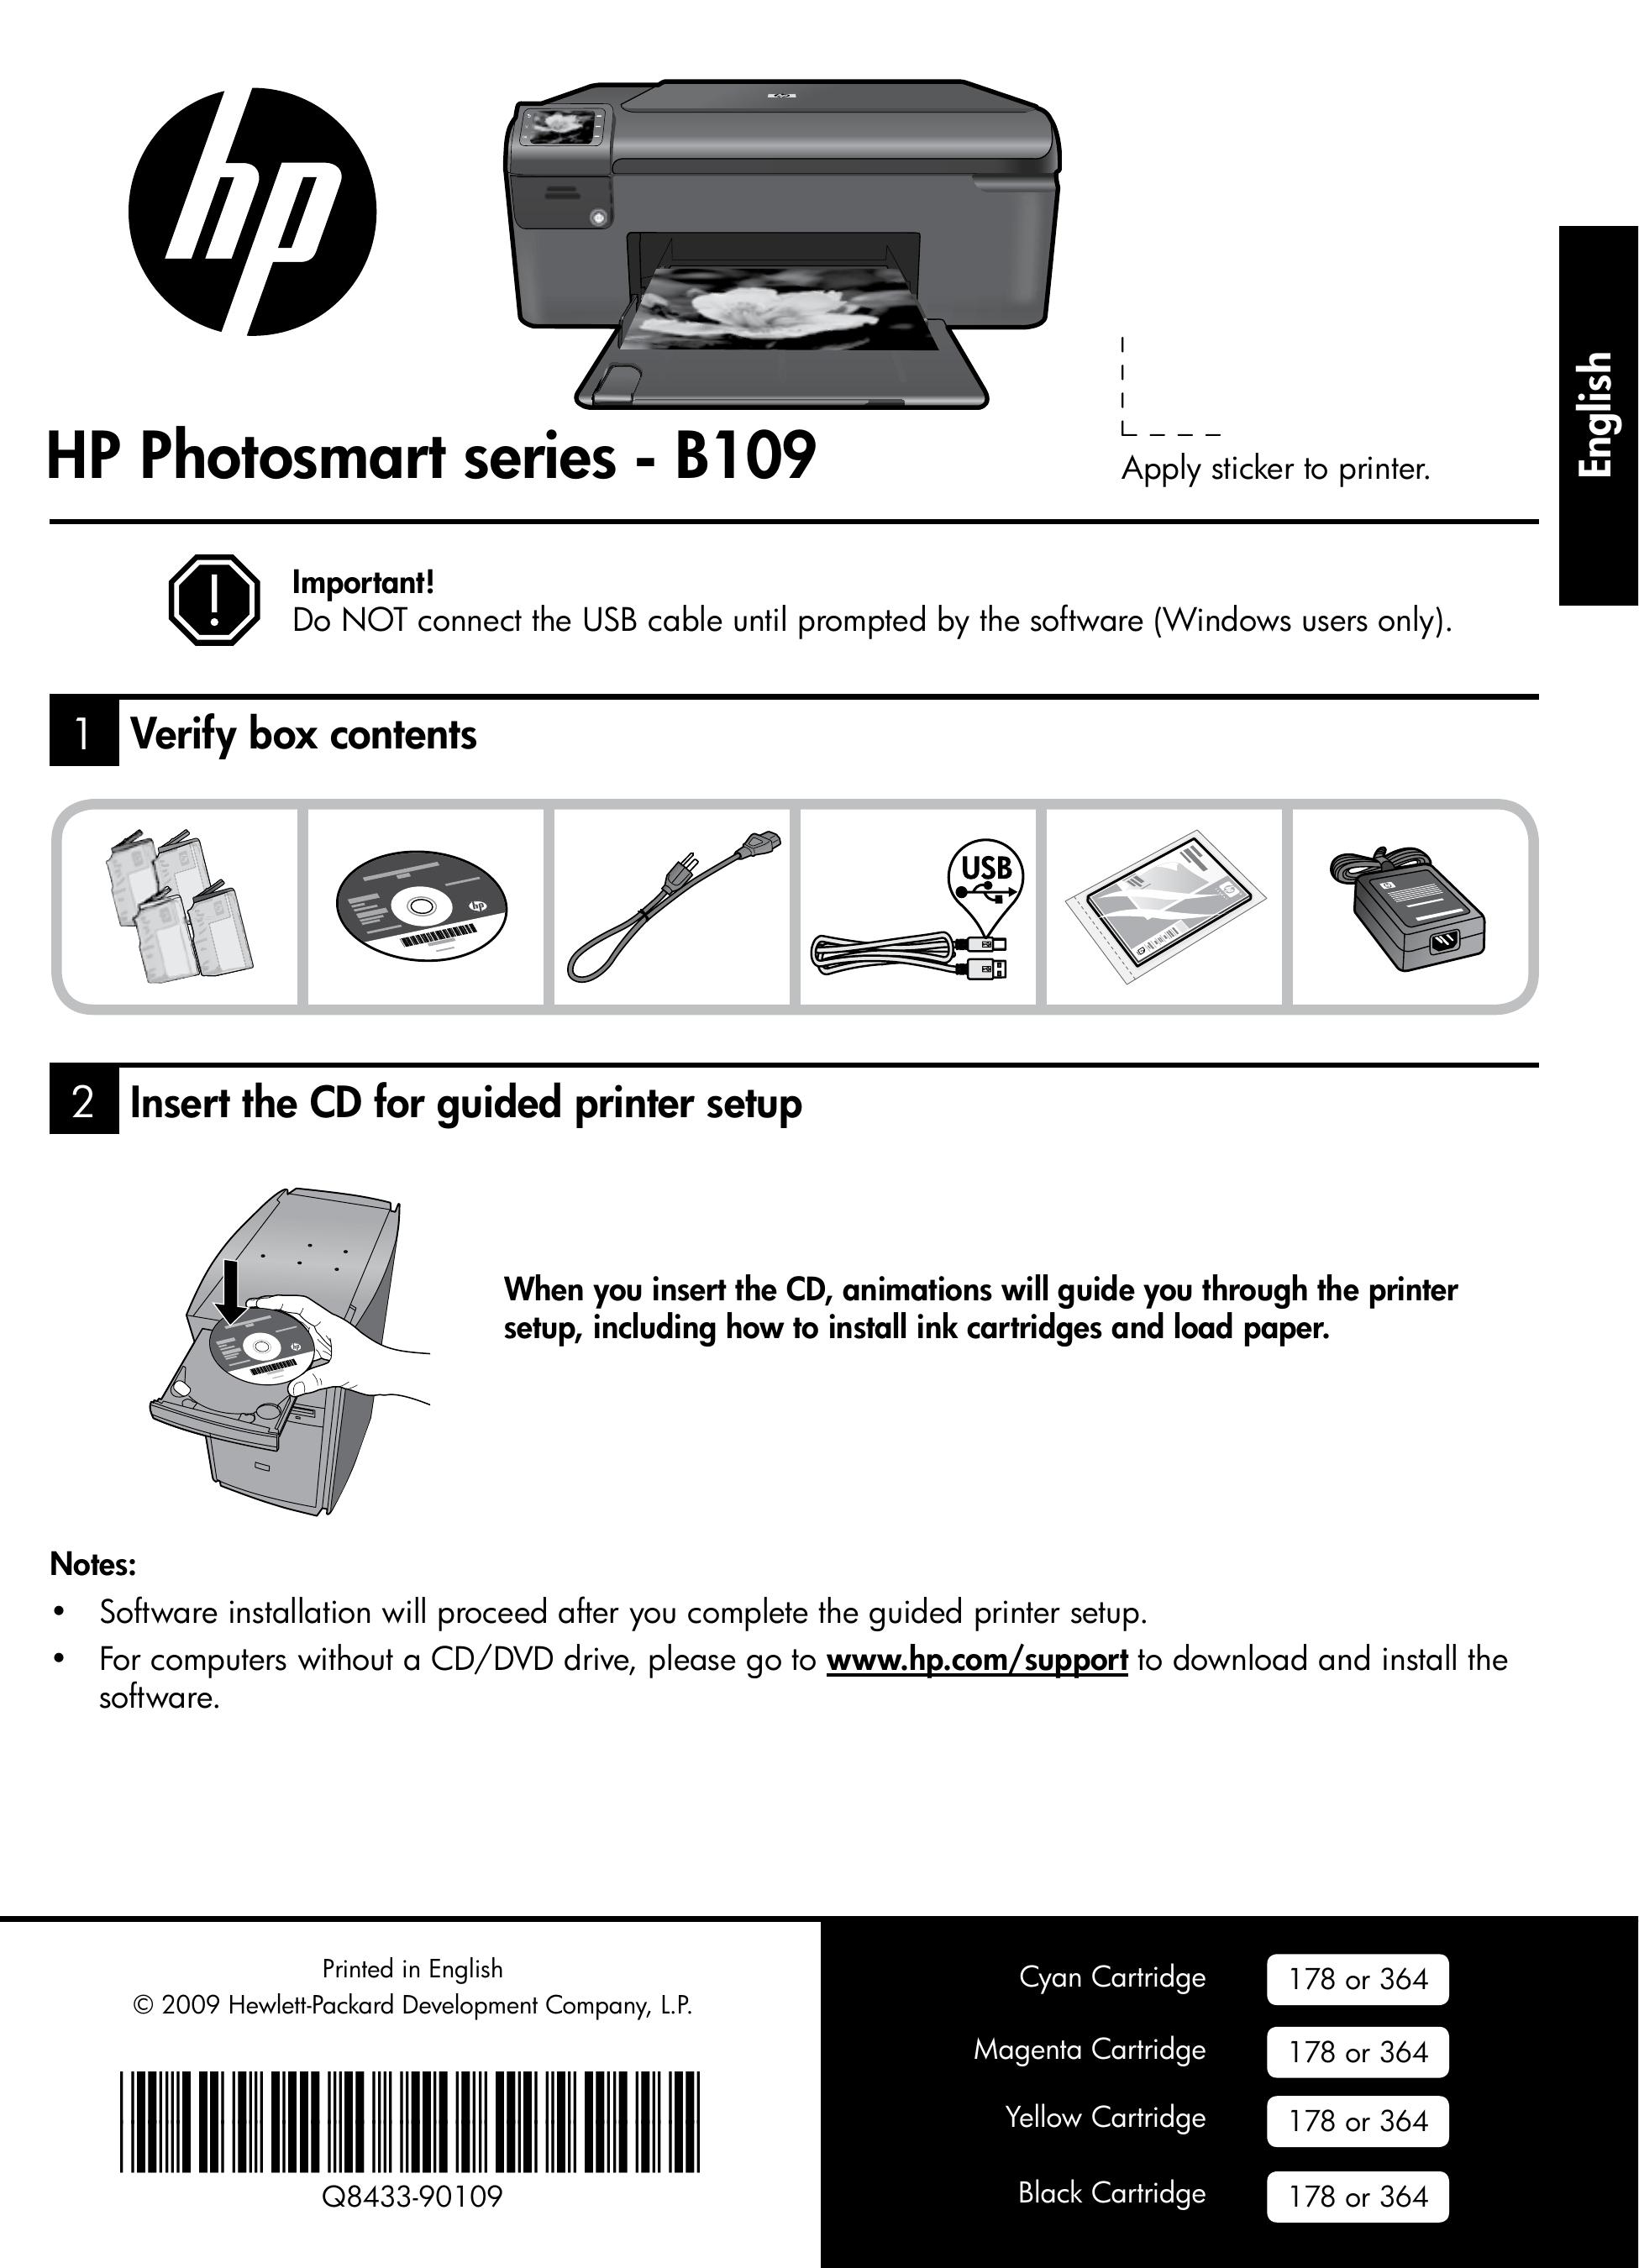 HP (Hewlett-Packard) B109 Photo Printer User Manual